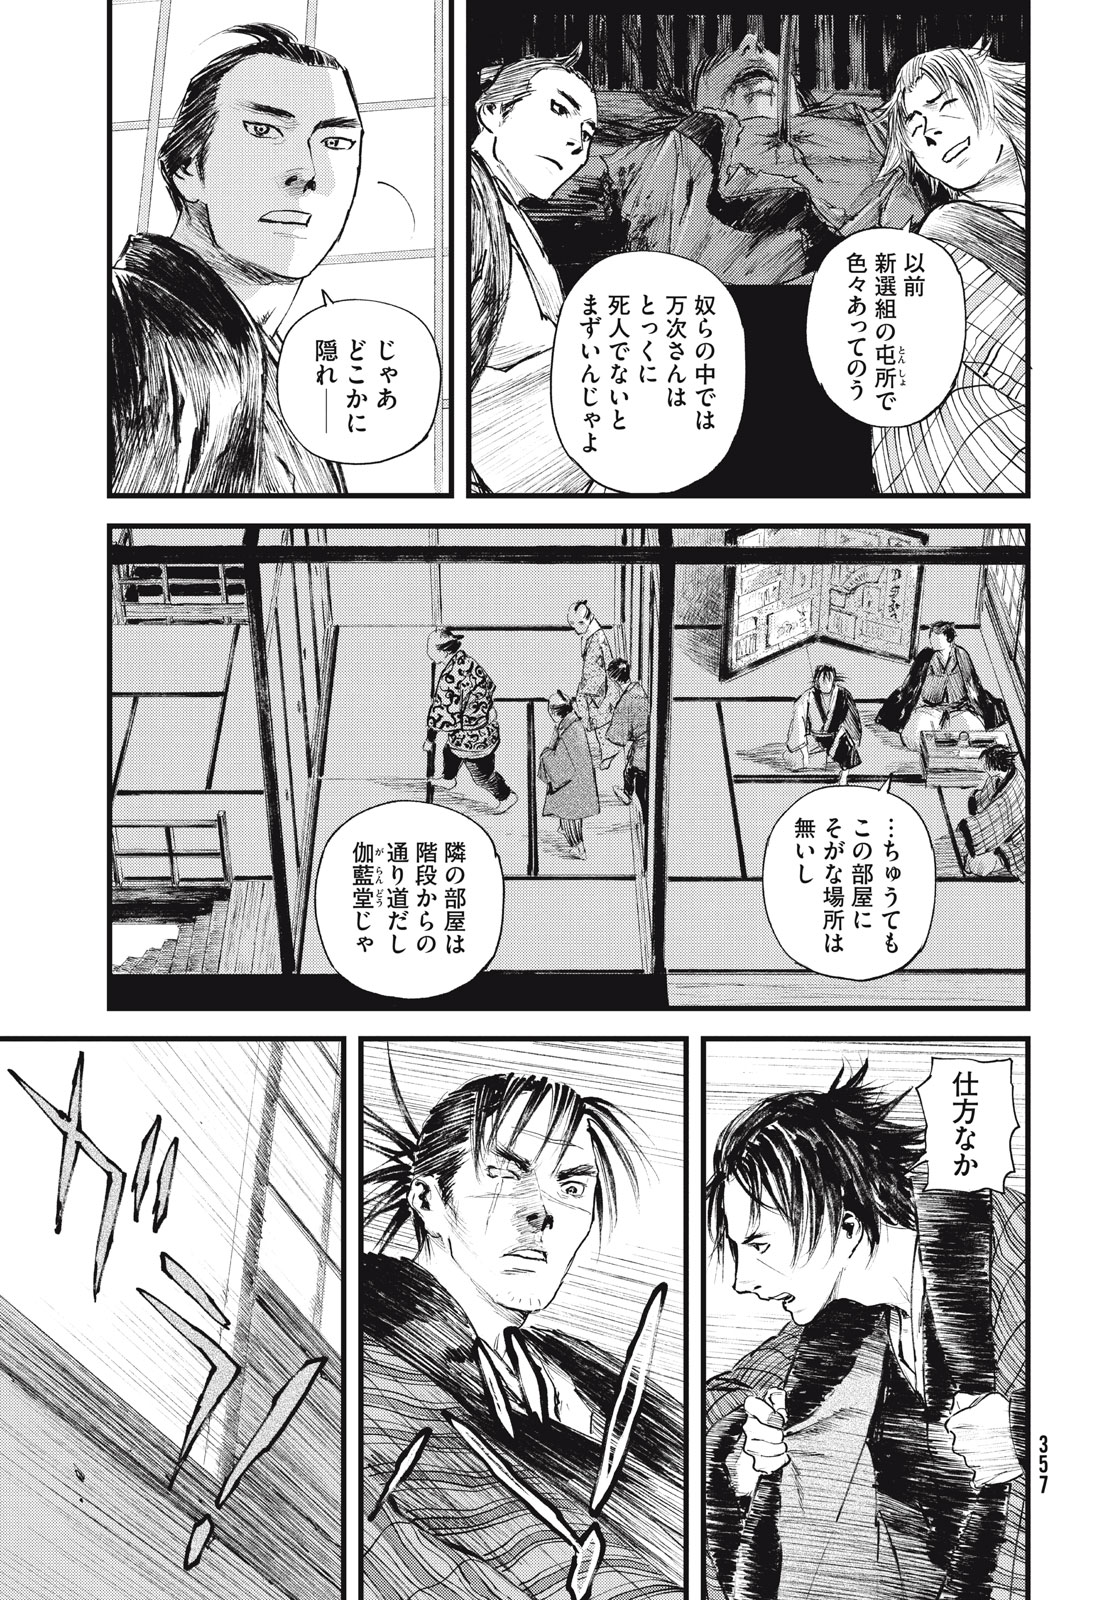 Blade of the Immortal: Bakumatsu Arc - Chapter 54 - Page 11